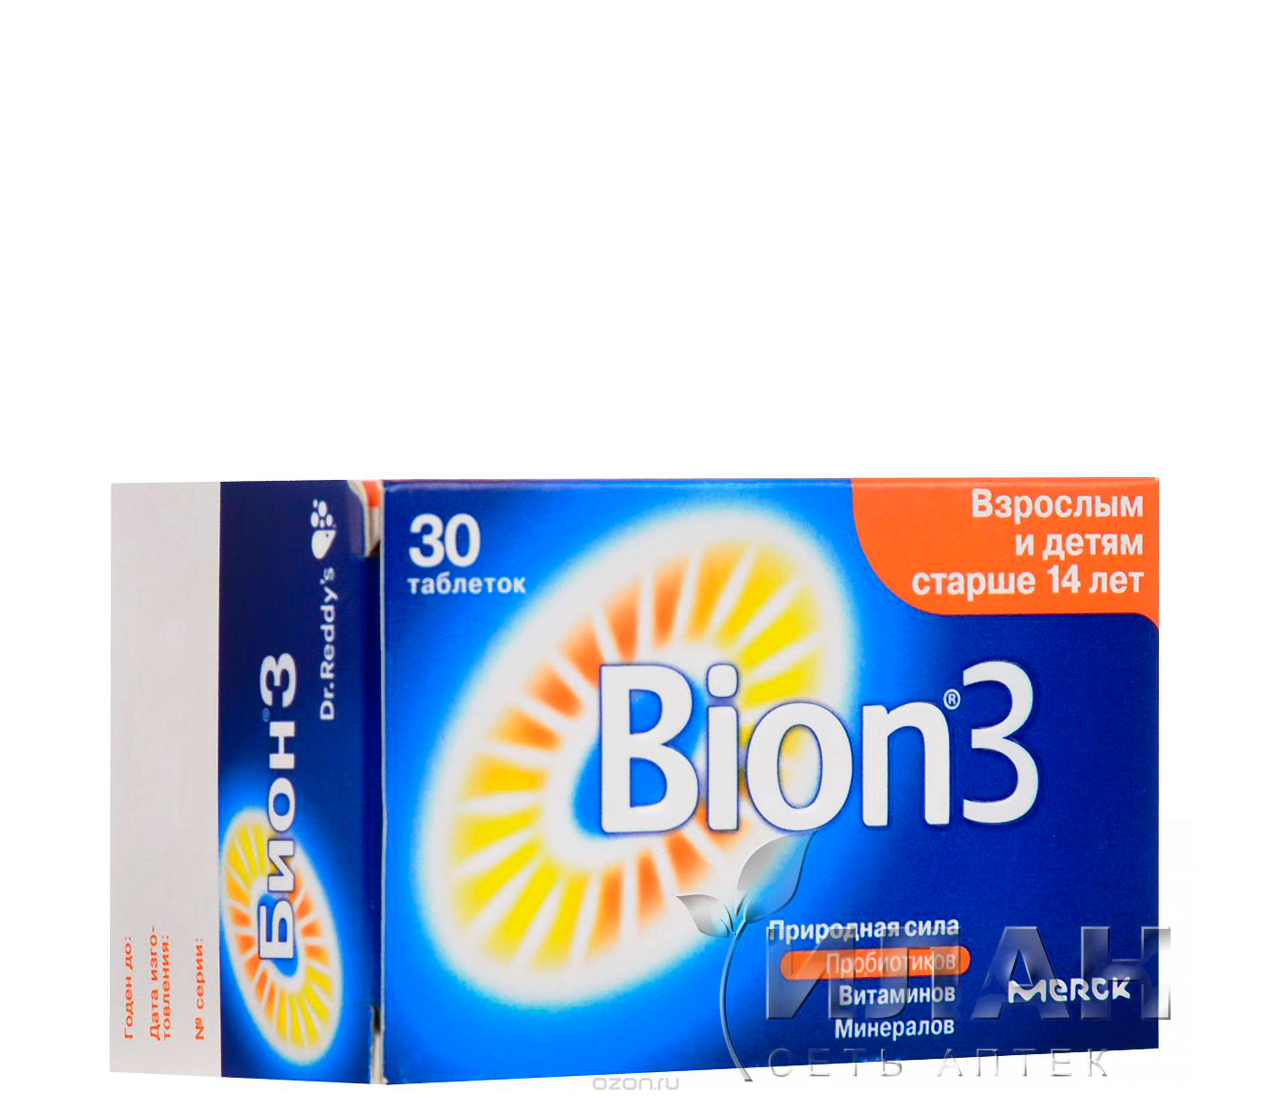 Бион 3 (Bion 3)